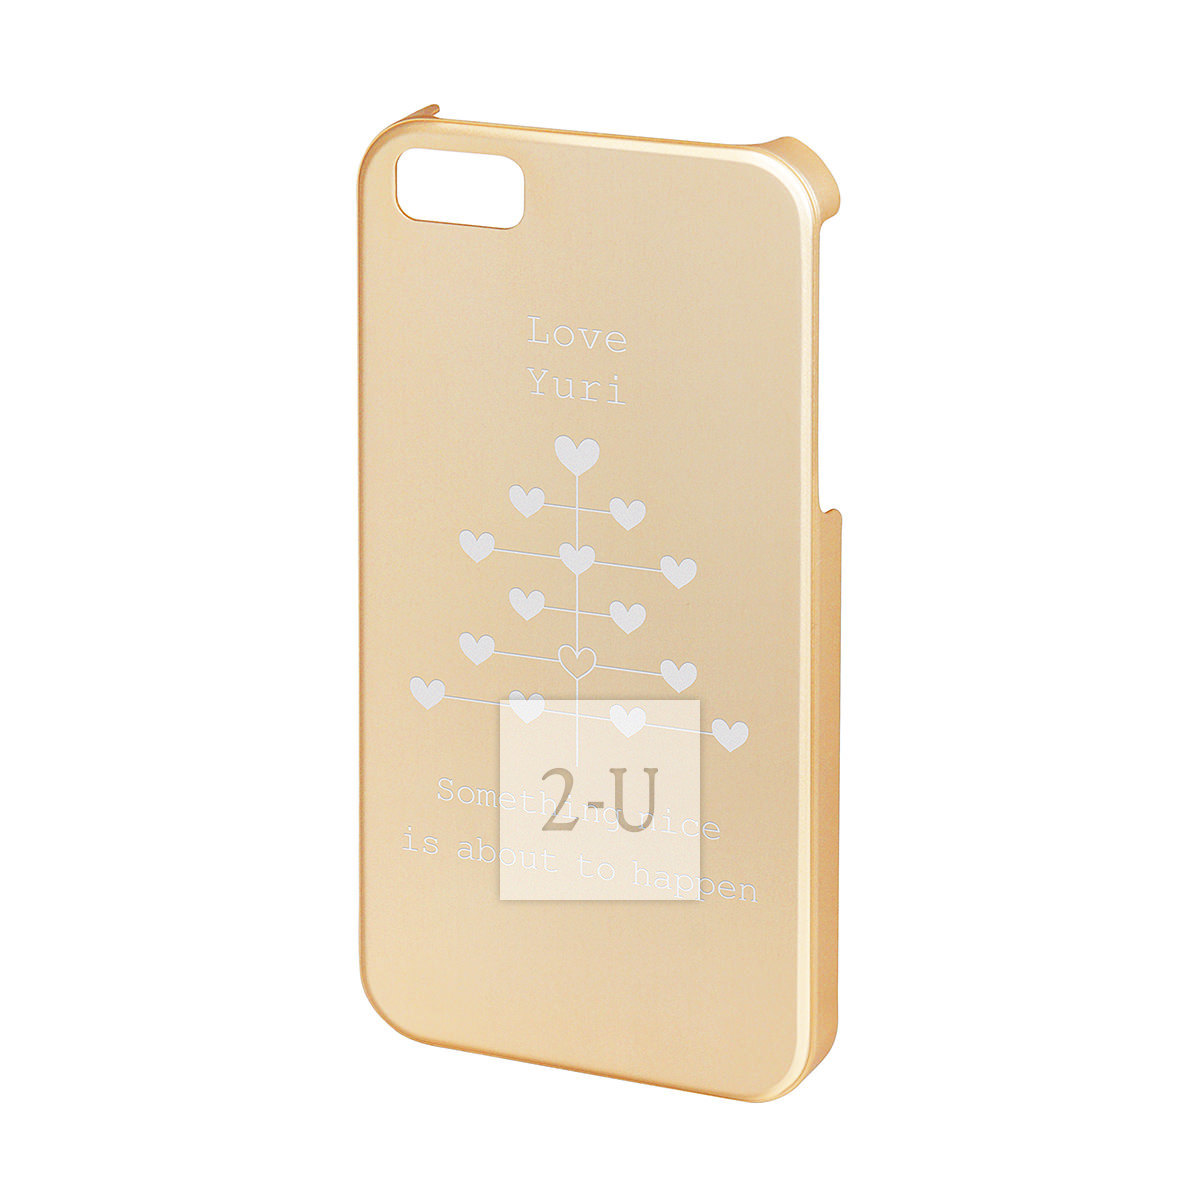 iPhone SE/5s/5 高品质手机壳diy铝机身外壳 香槟金色